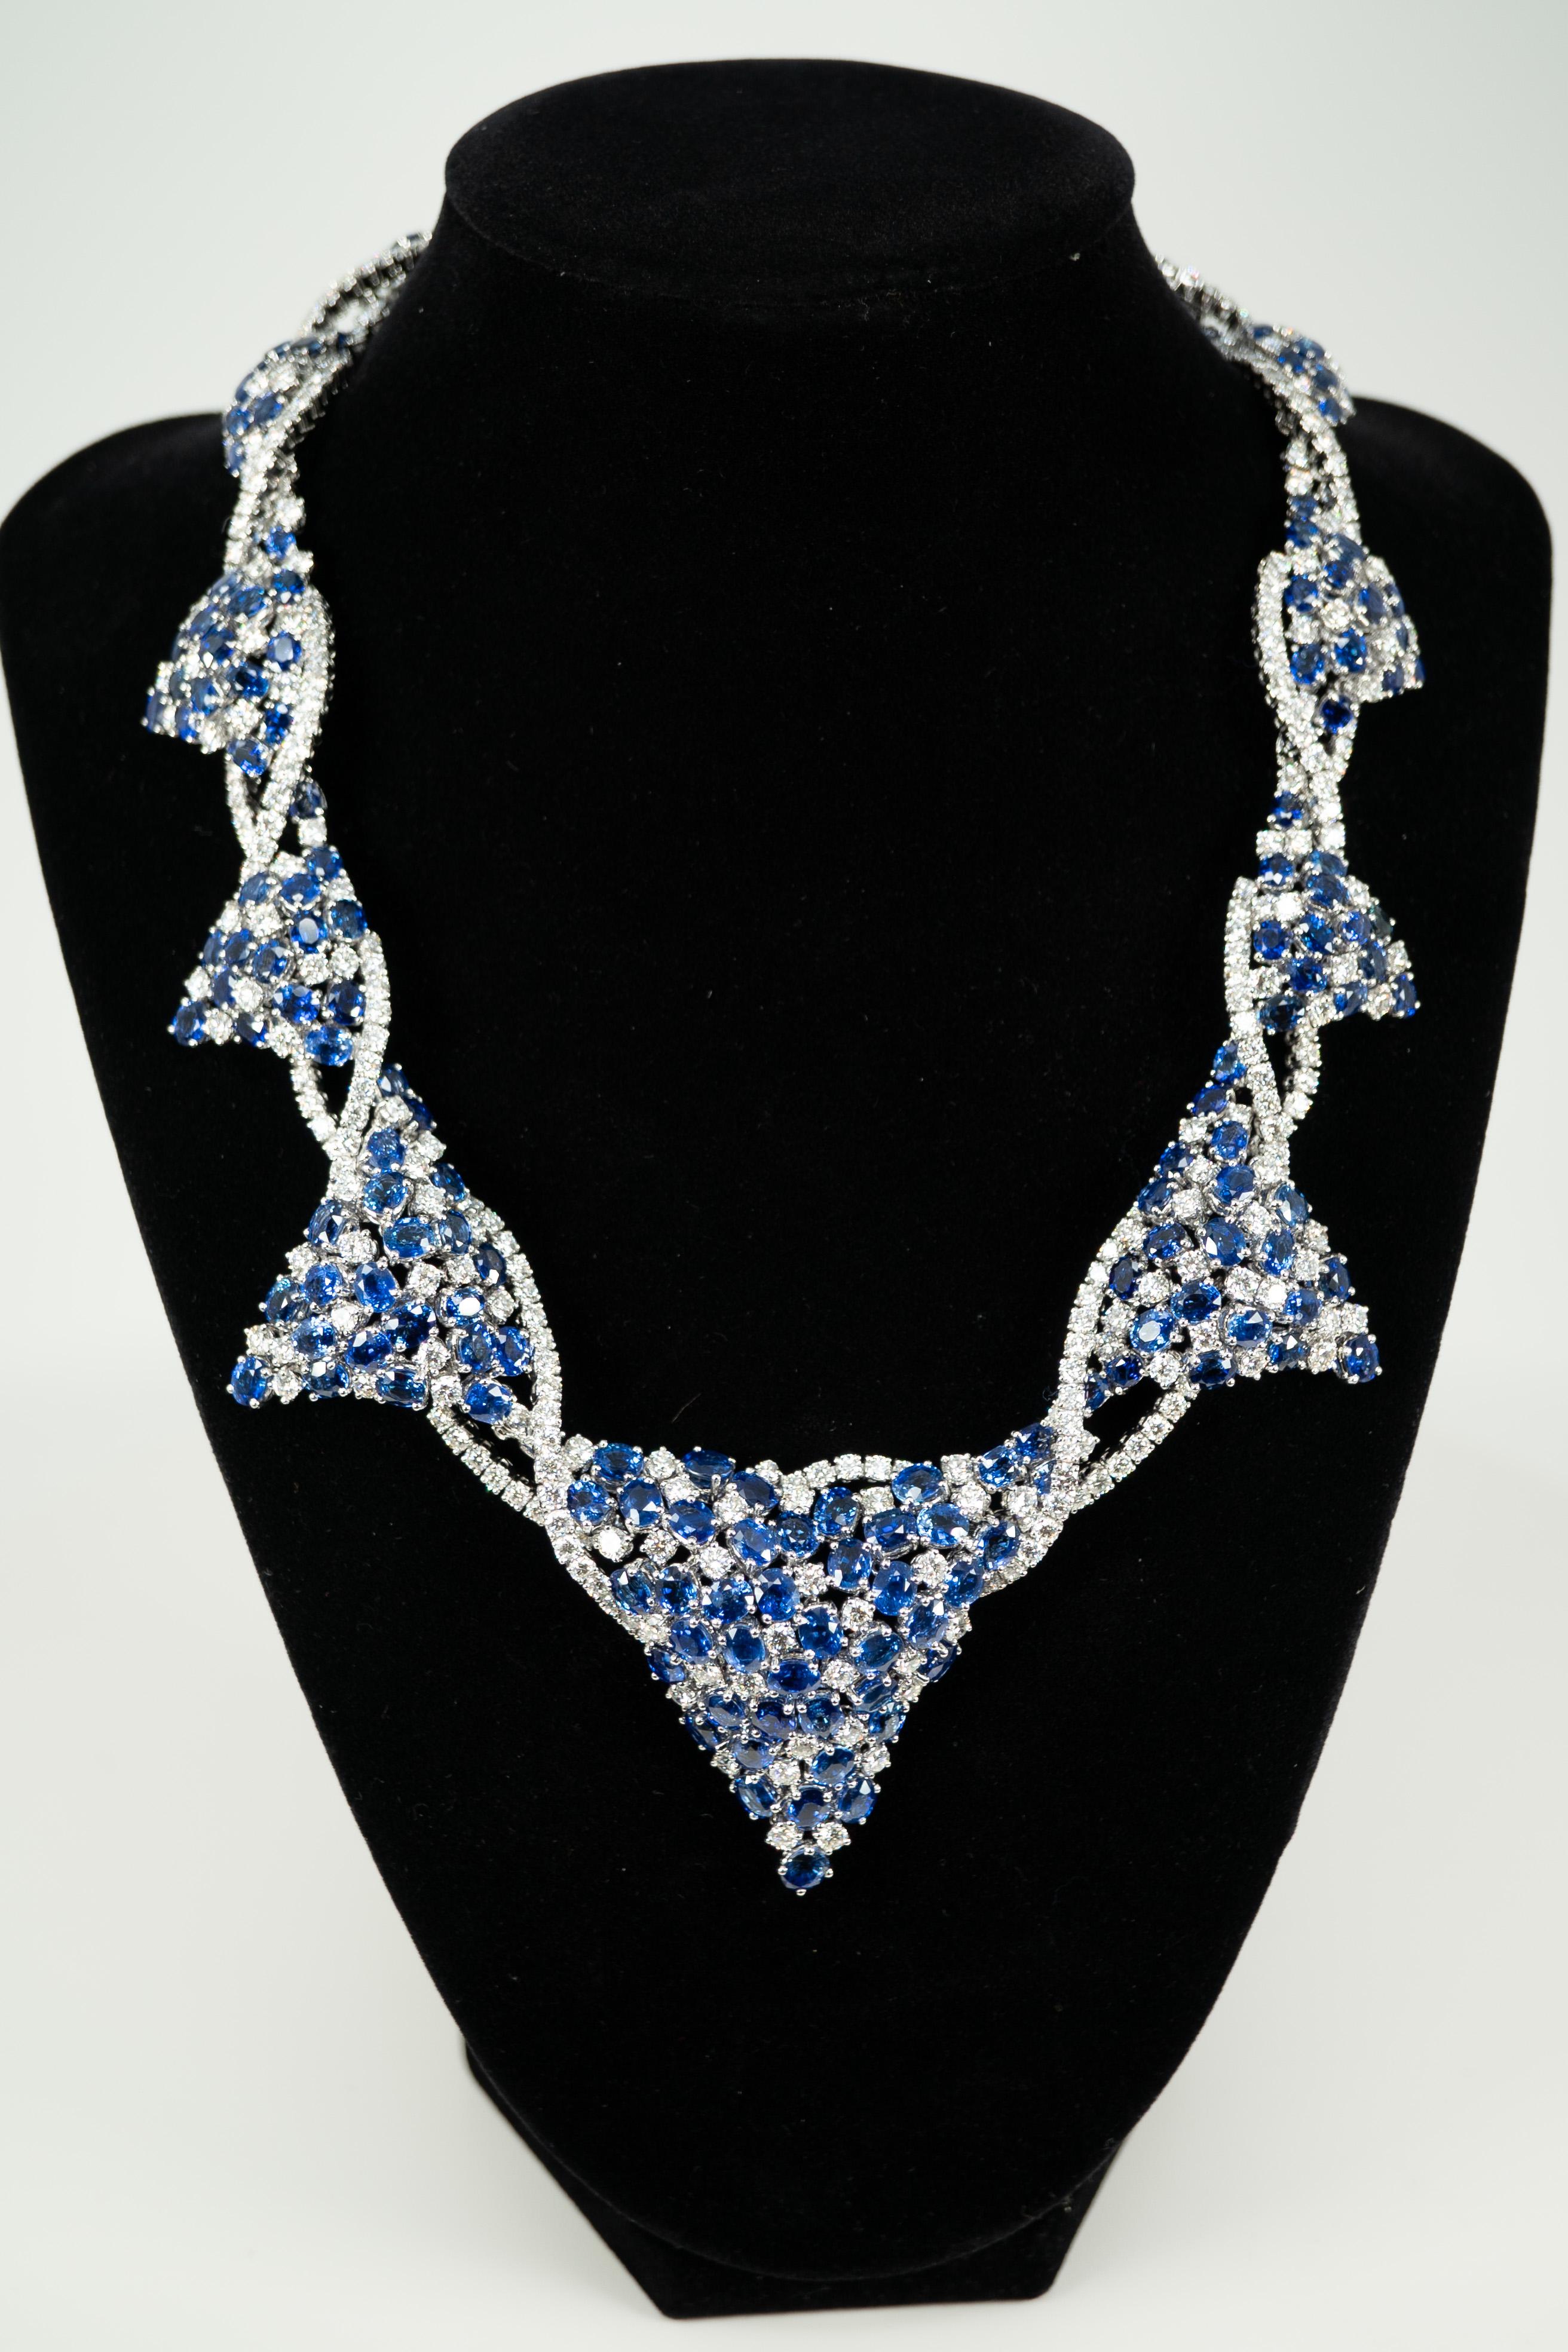 Yvel White Gold 28.48 Carat Diamond 69.65 Carat Blue Sapphire Necklace ...